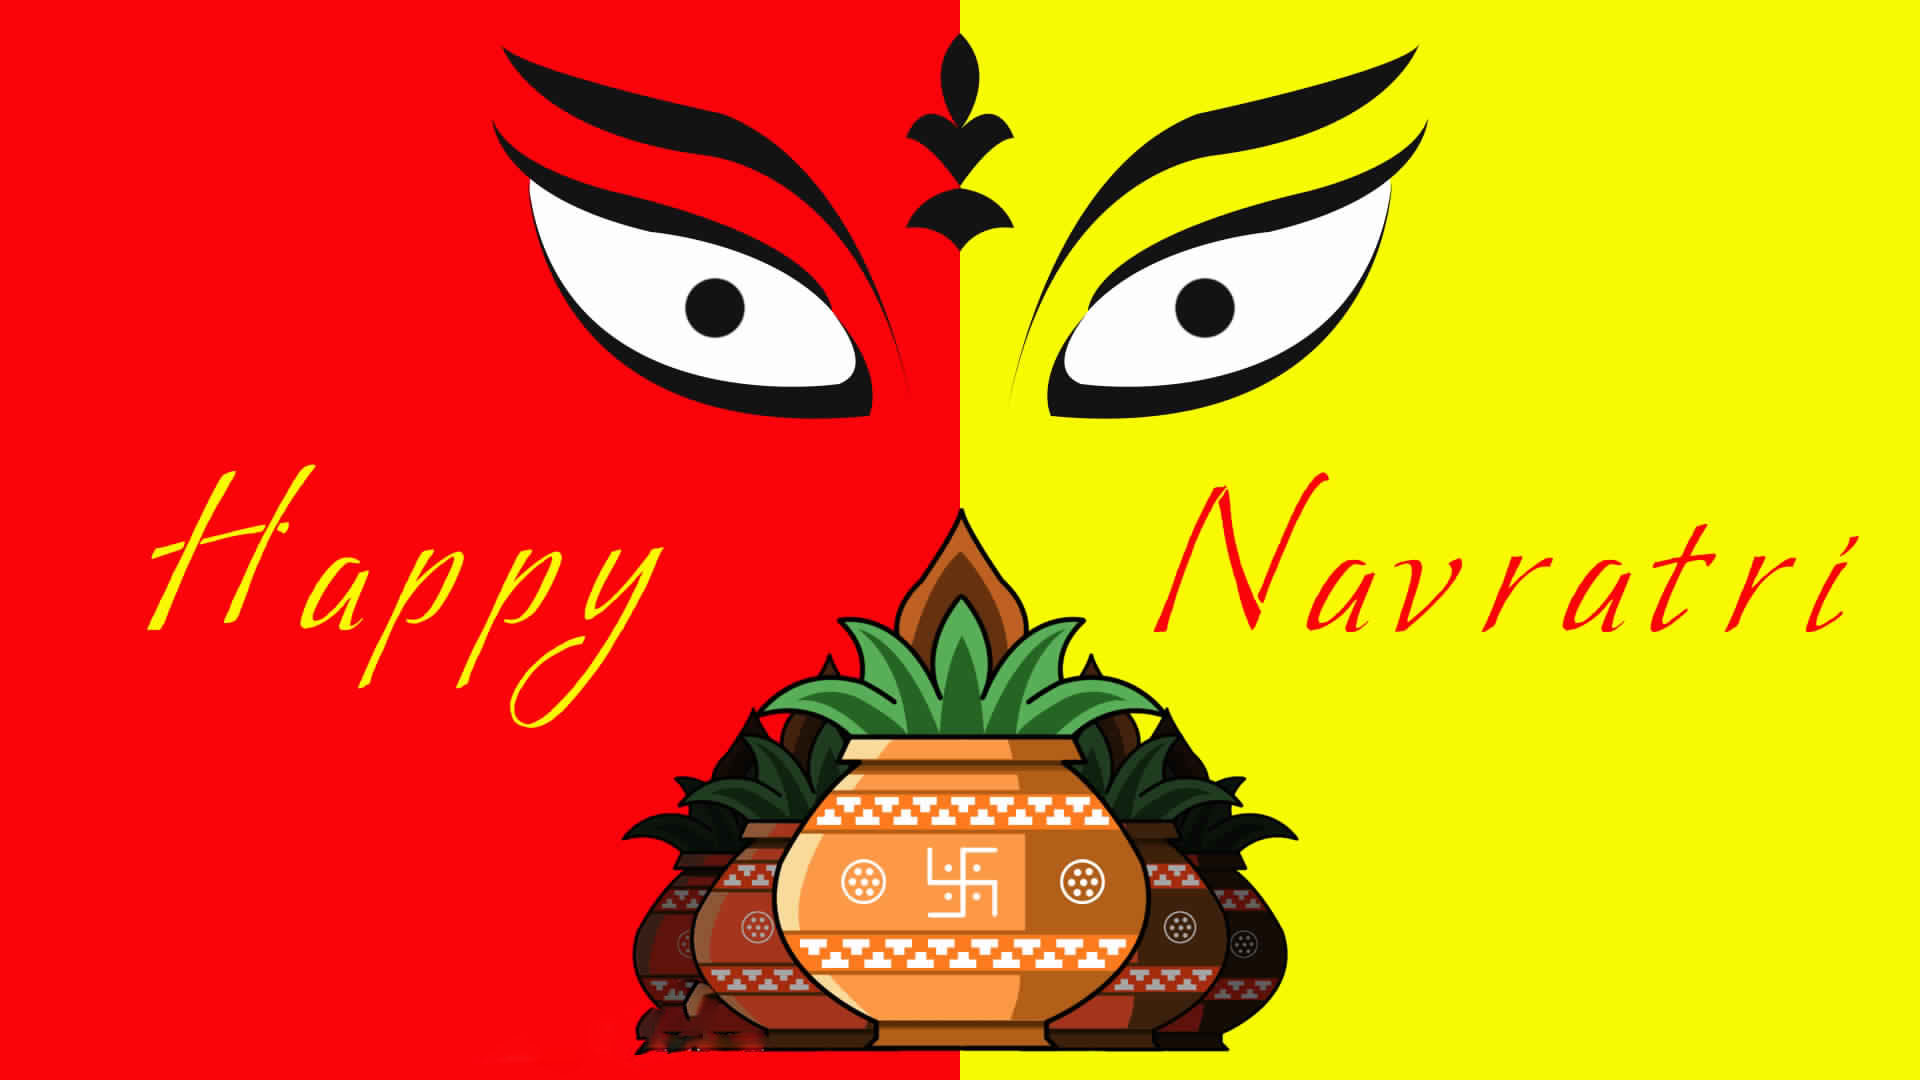 Navratri wallpaper hd for mobile